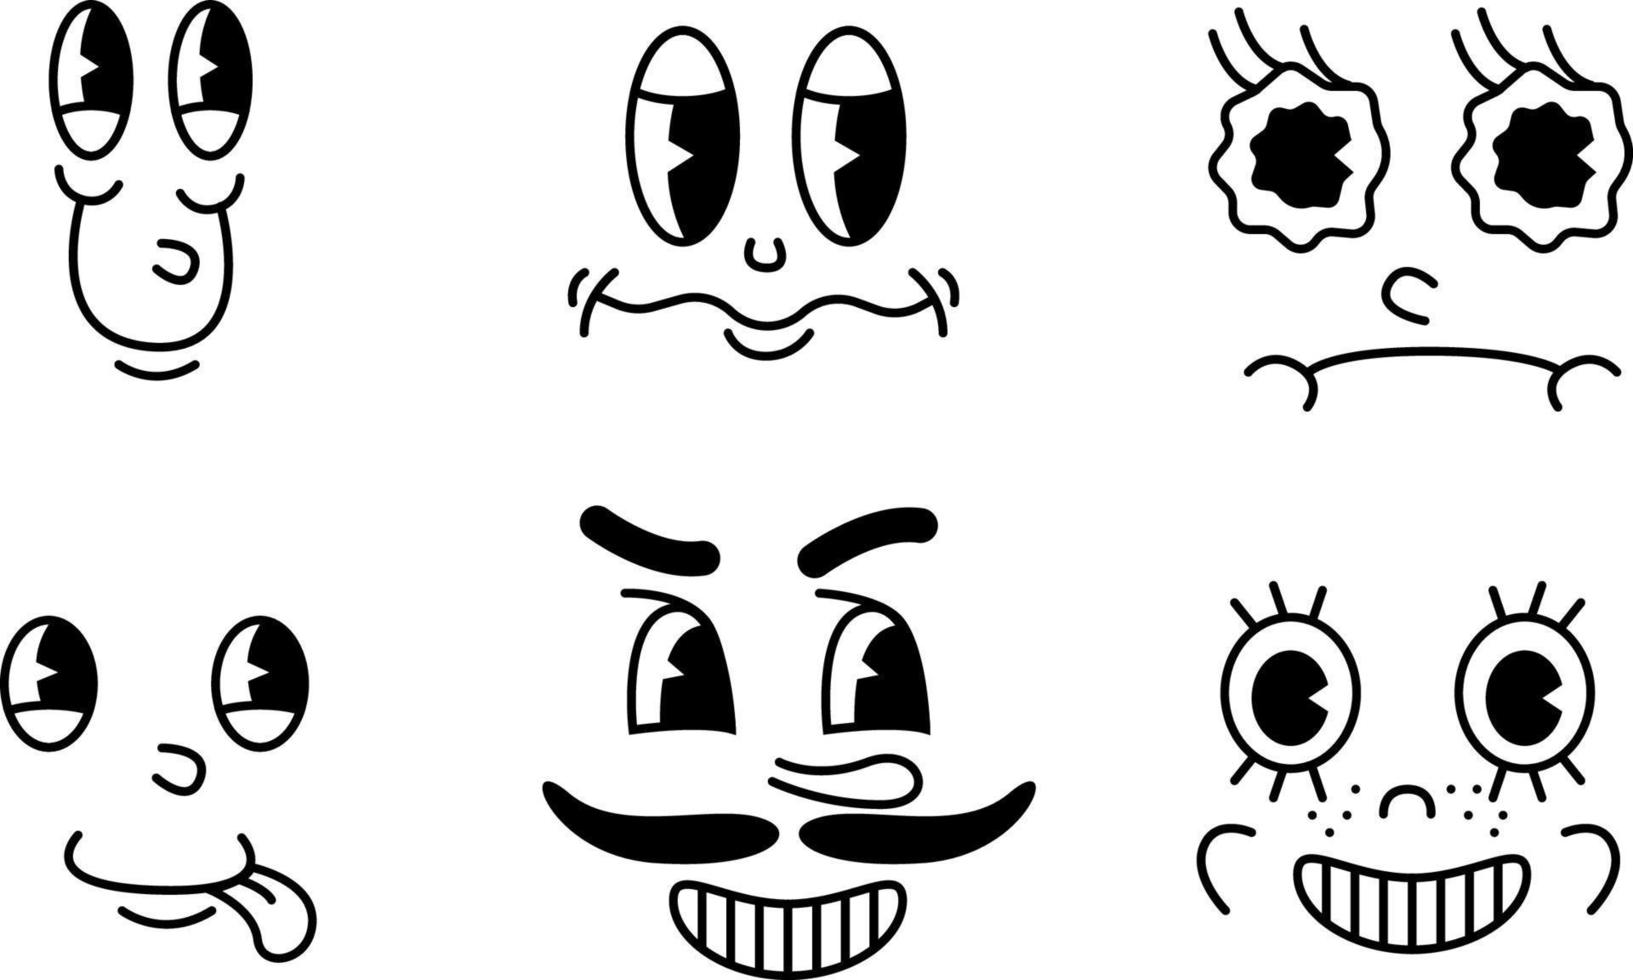 Retro cartoon character faces vector